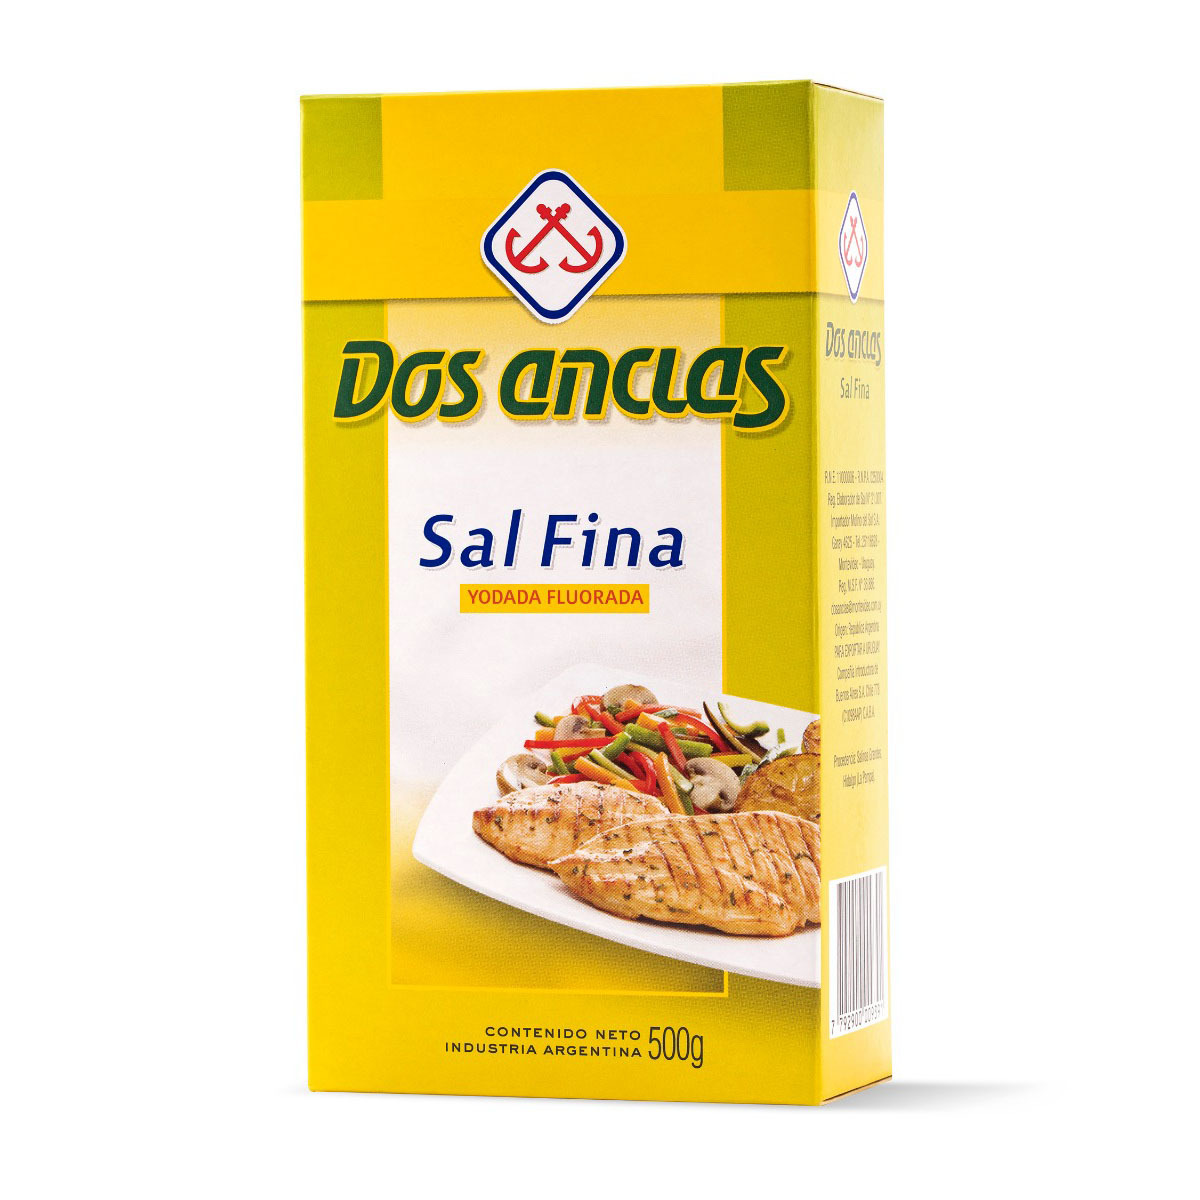 Dos Anclas Sal Fina Salt, 500 g / 1.1 lb box